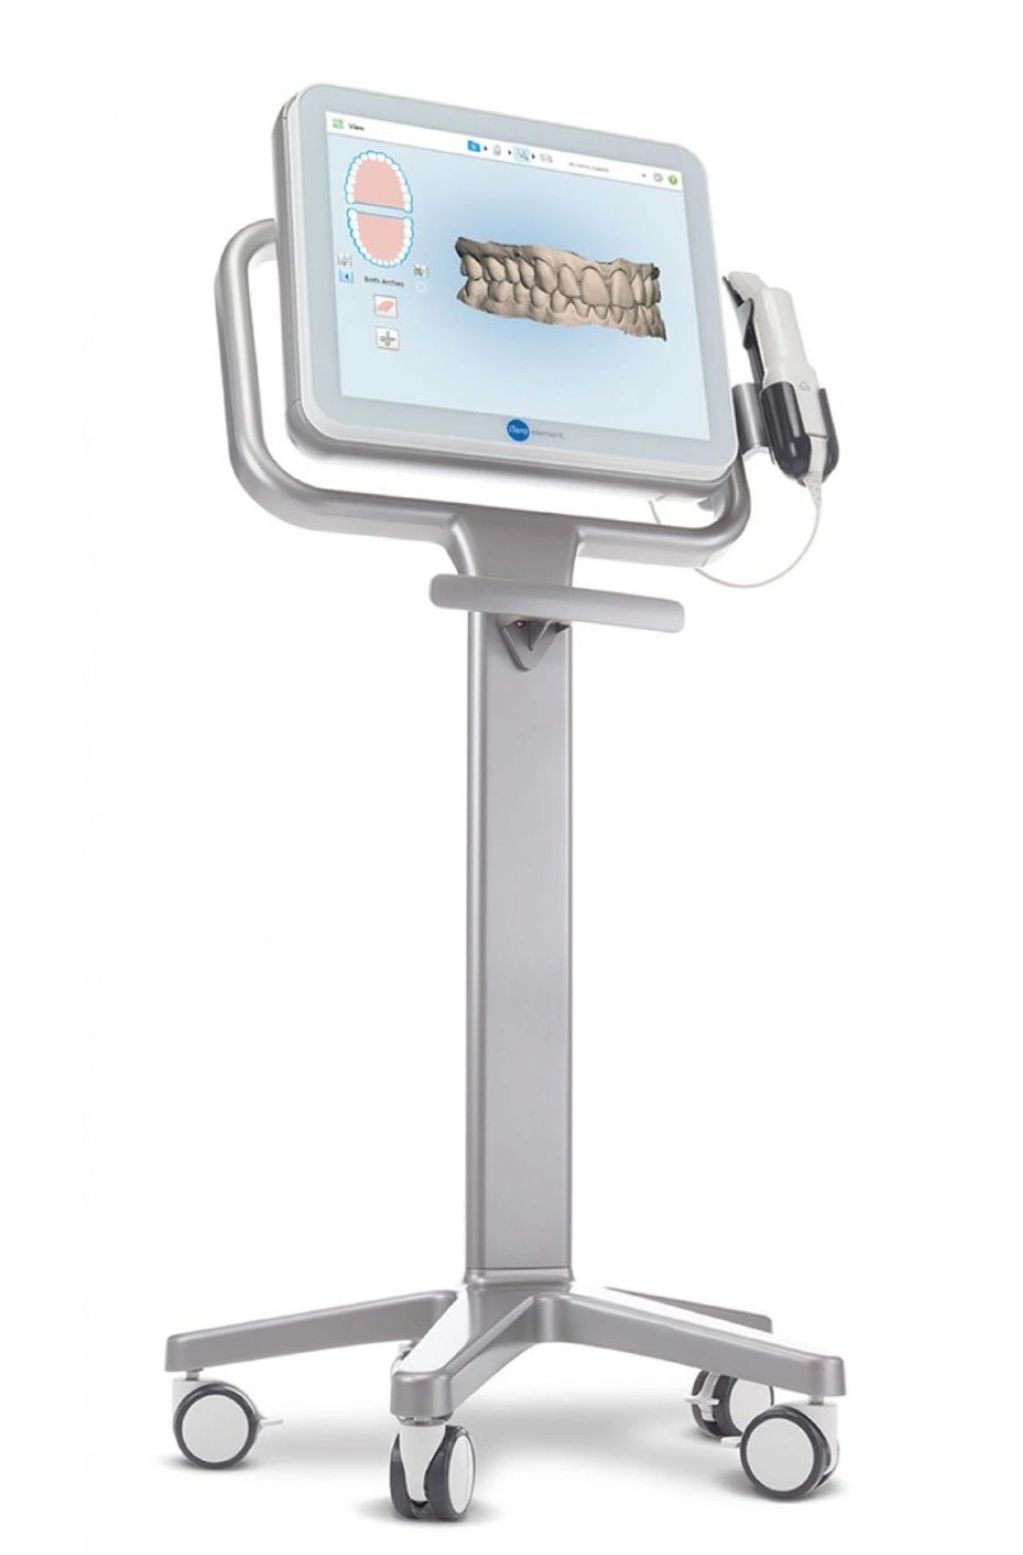 iTero dental scanner 